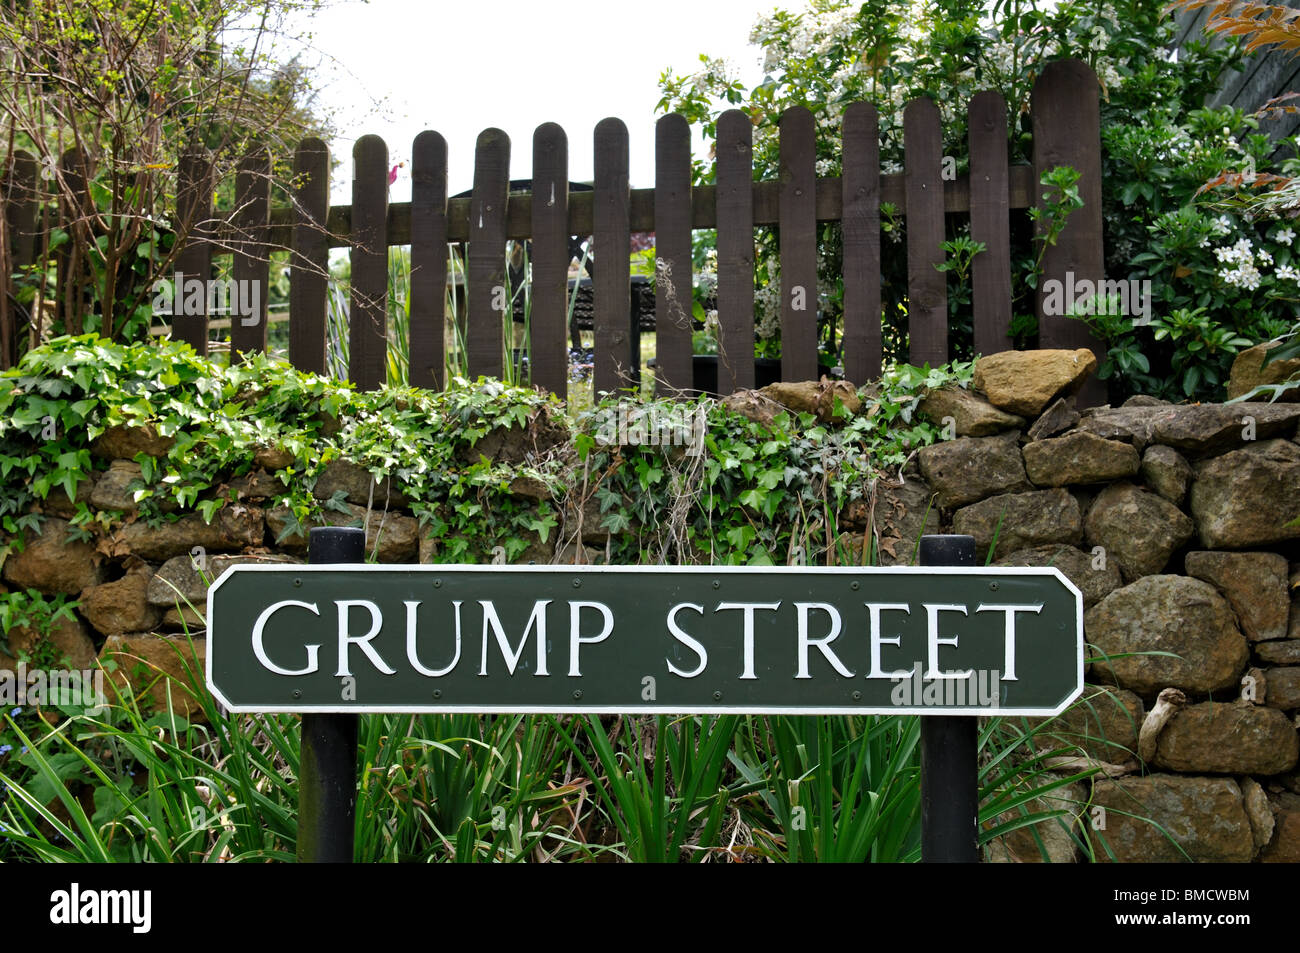 Grump Street sign, Ilmington, Warwickshire, England, UK Stock Photo